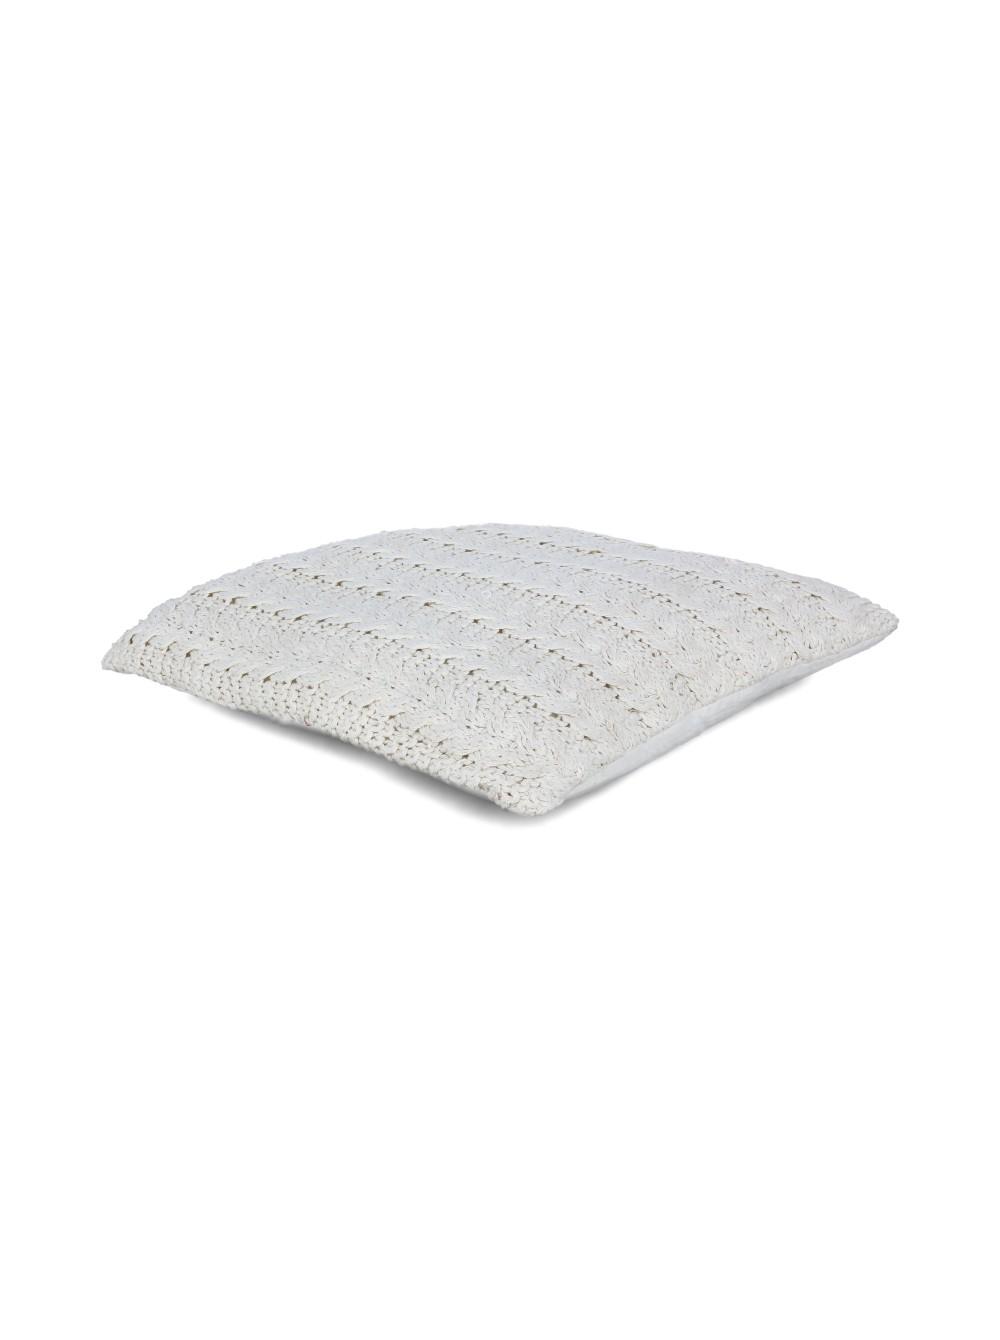 Selected image for GIFTDECOR Ukrasni beli vuneni jastuk više uskih pletenica 60x60cm